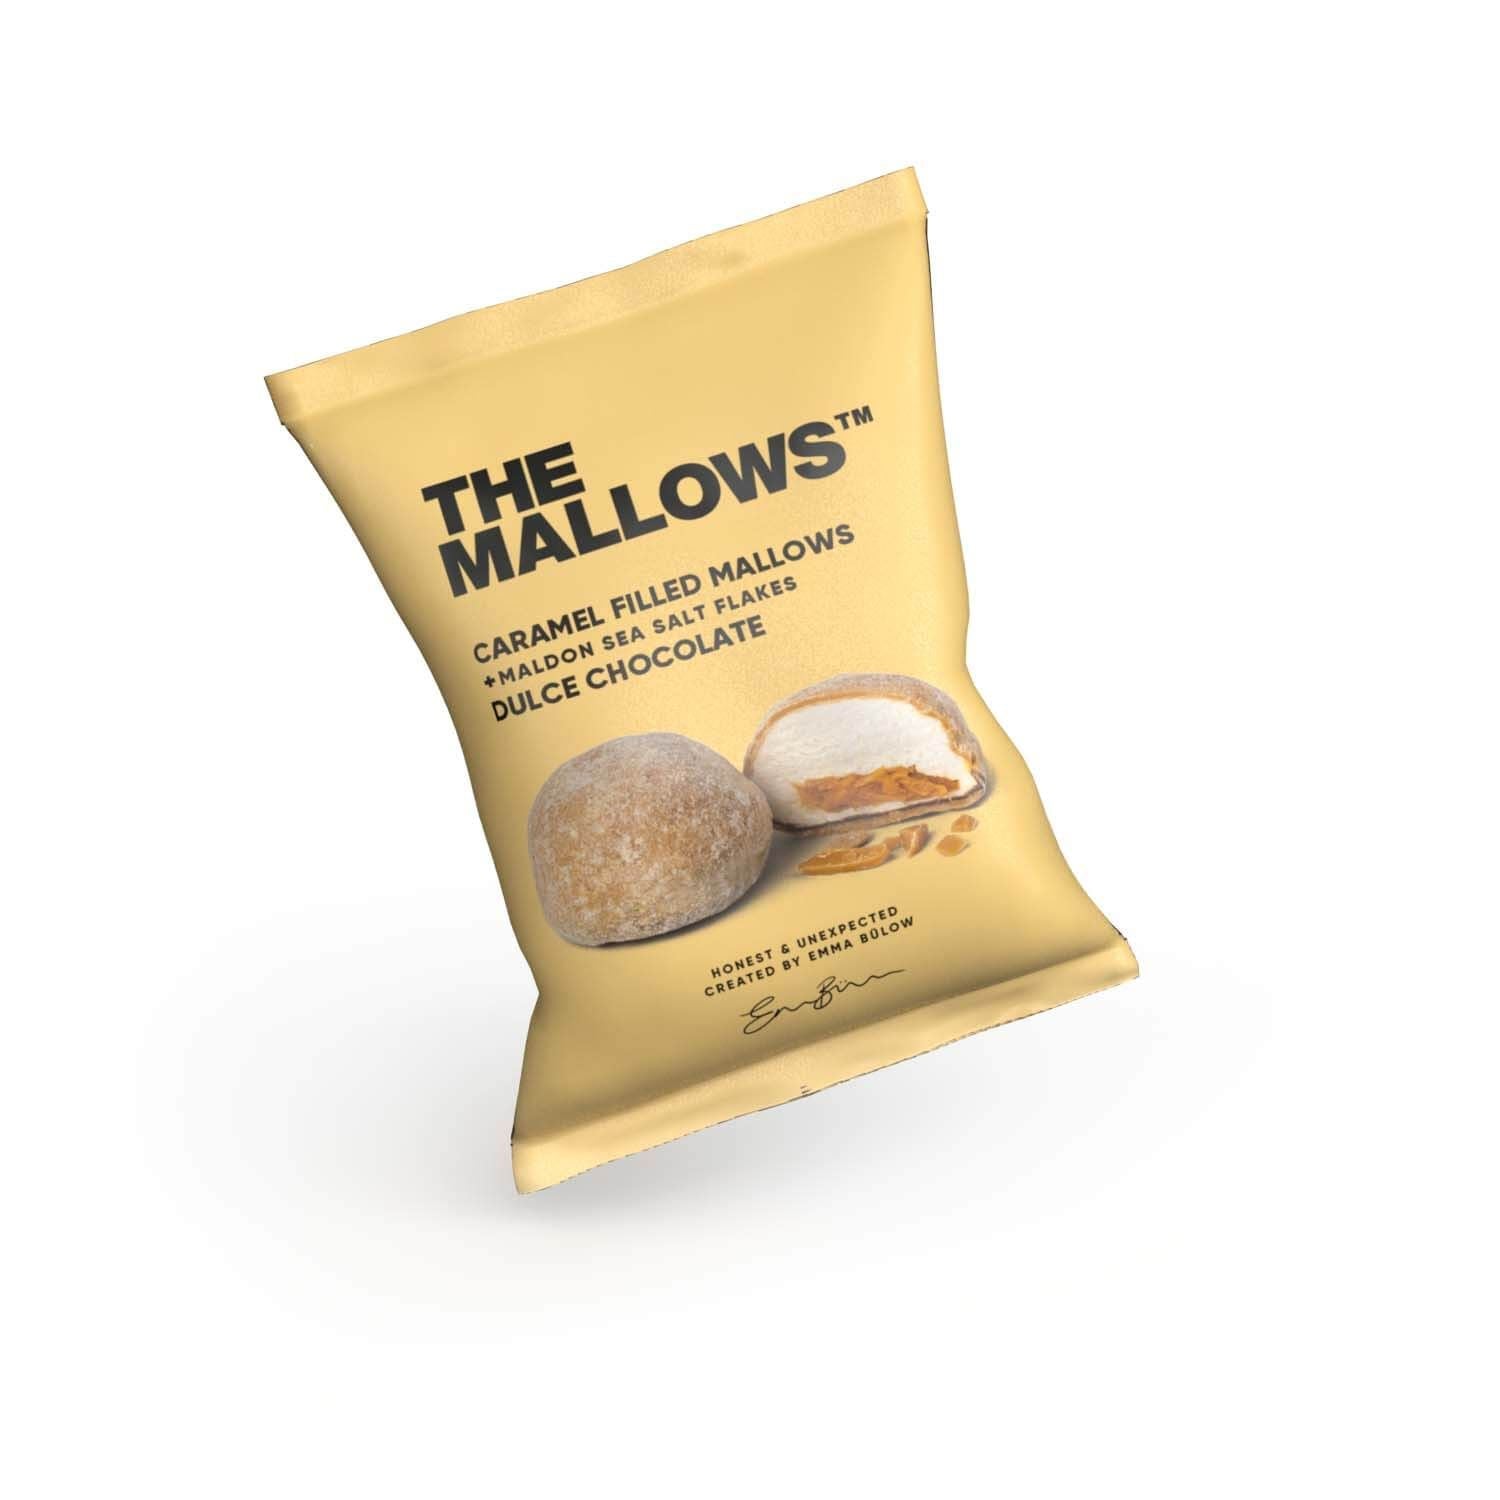 The Mallows Marshmallows med karamellfyllning & choklad dulce choklad, 18g